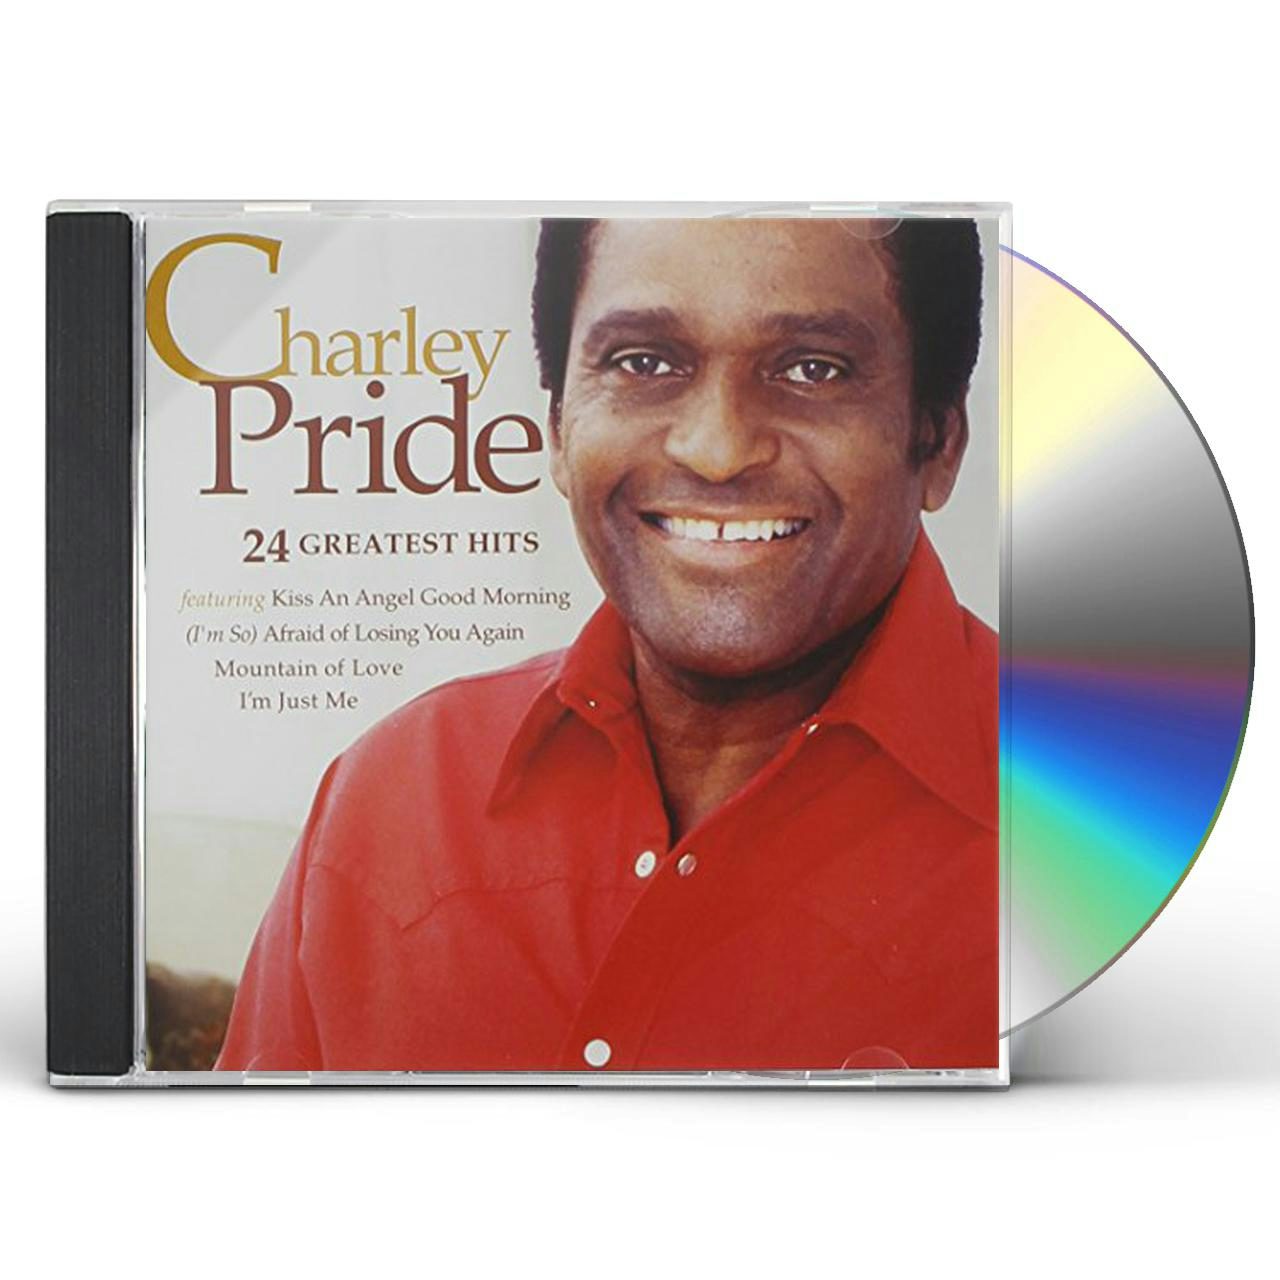 Charley Pride 24 GREATEST HITS CD